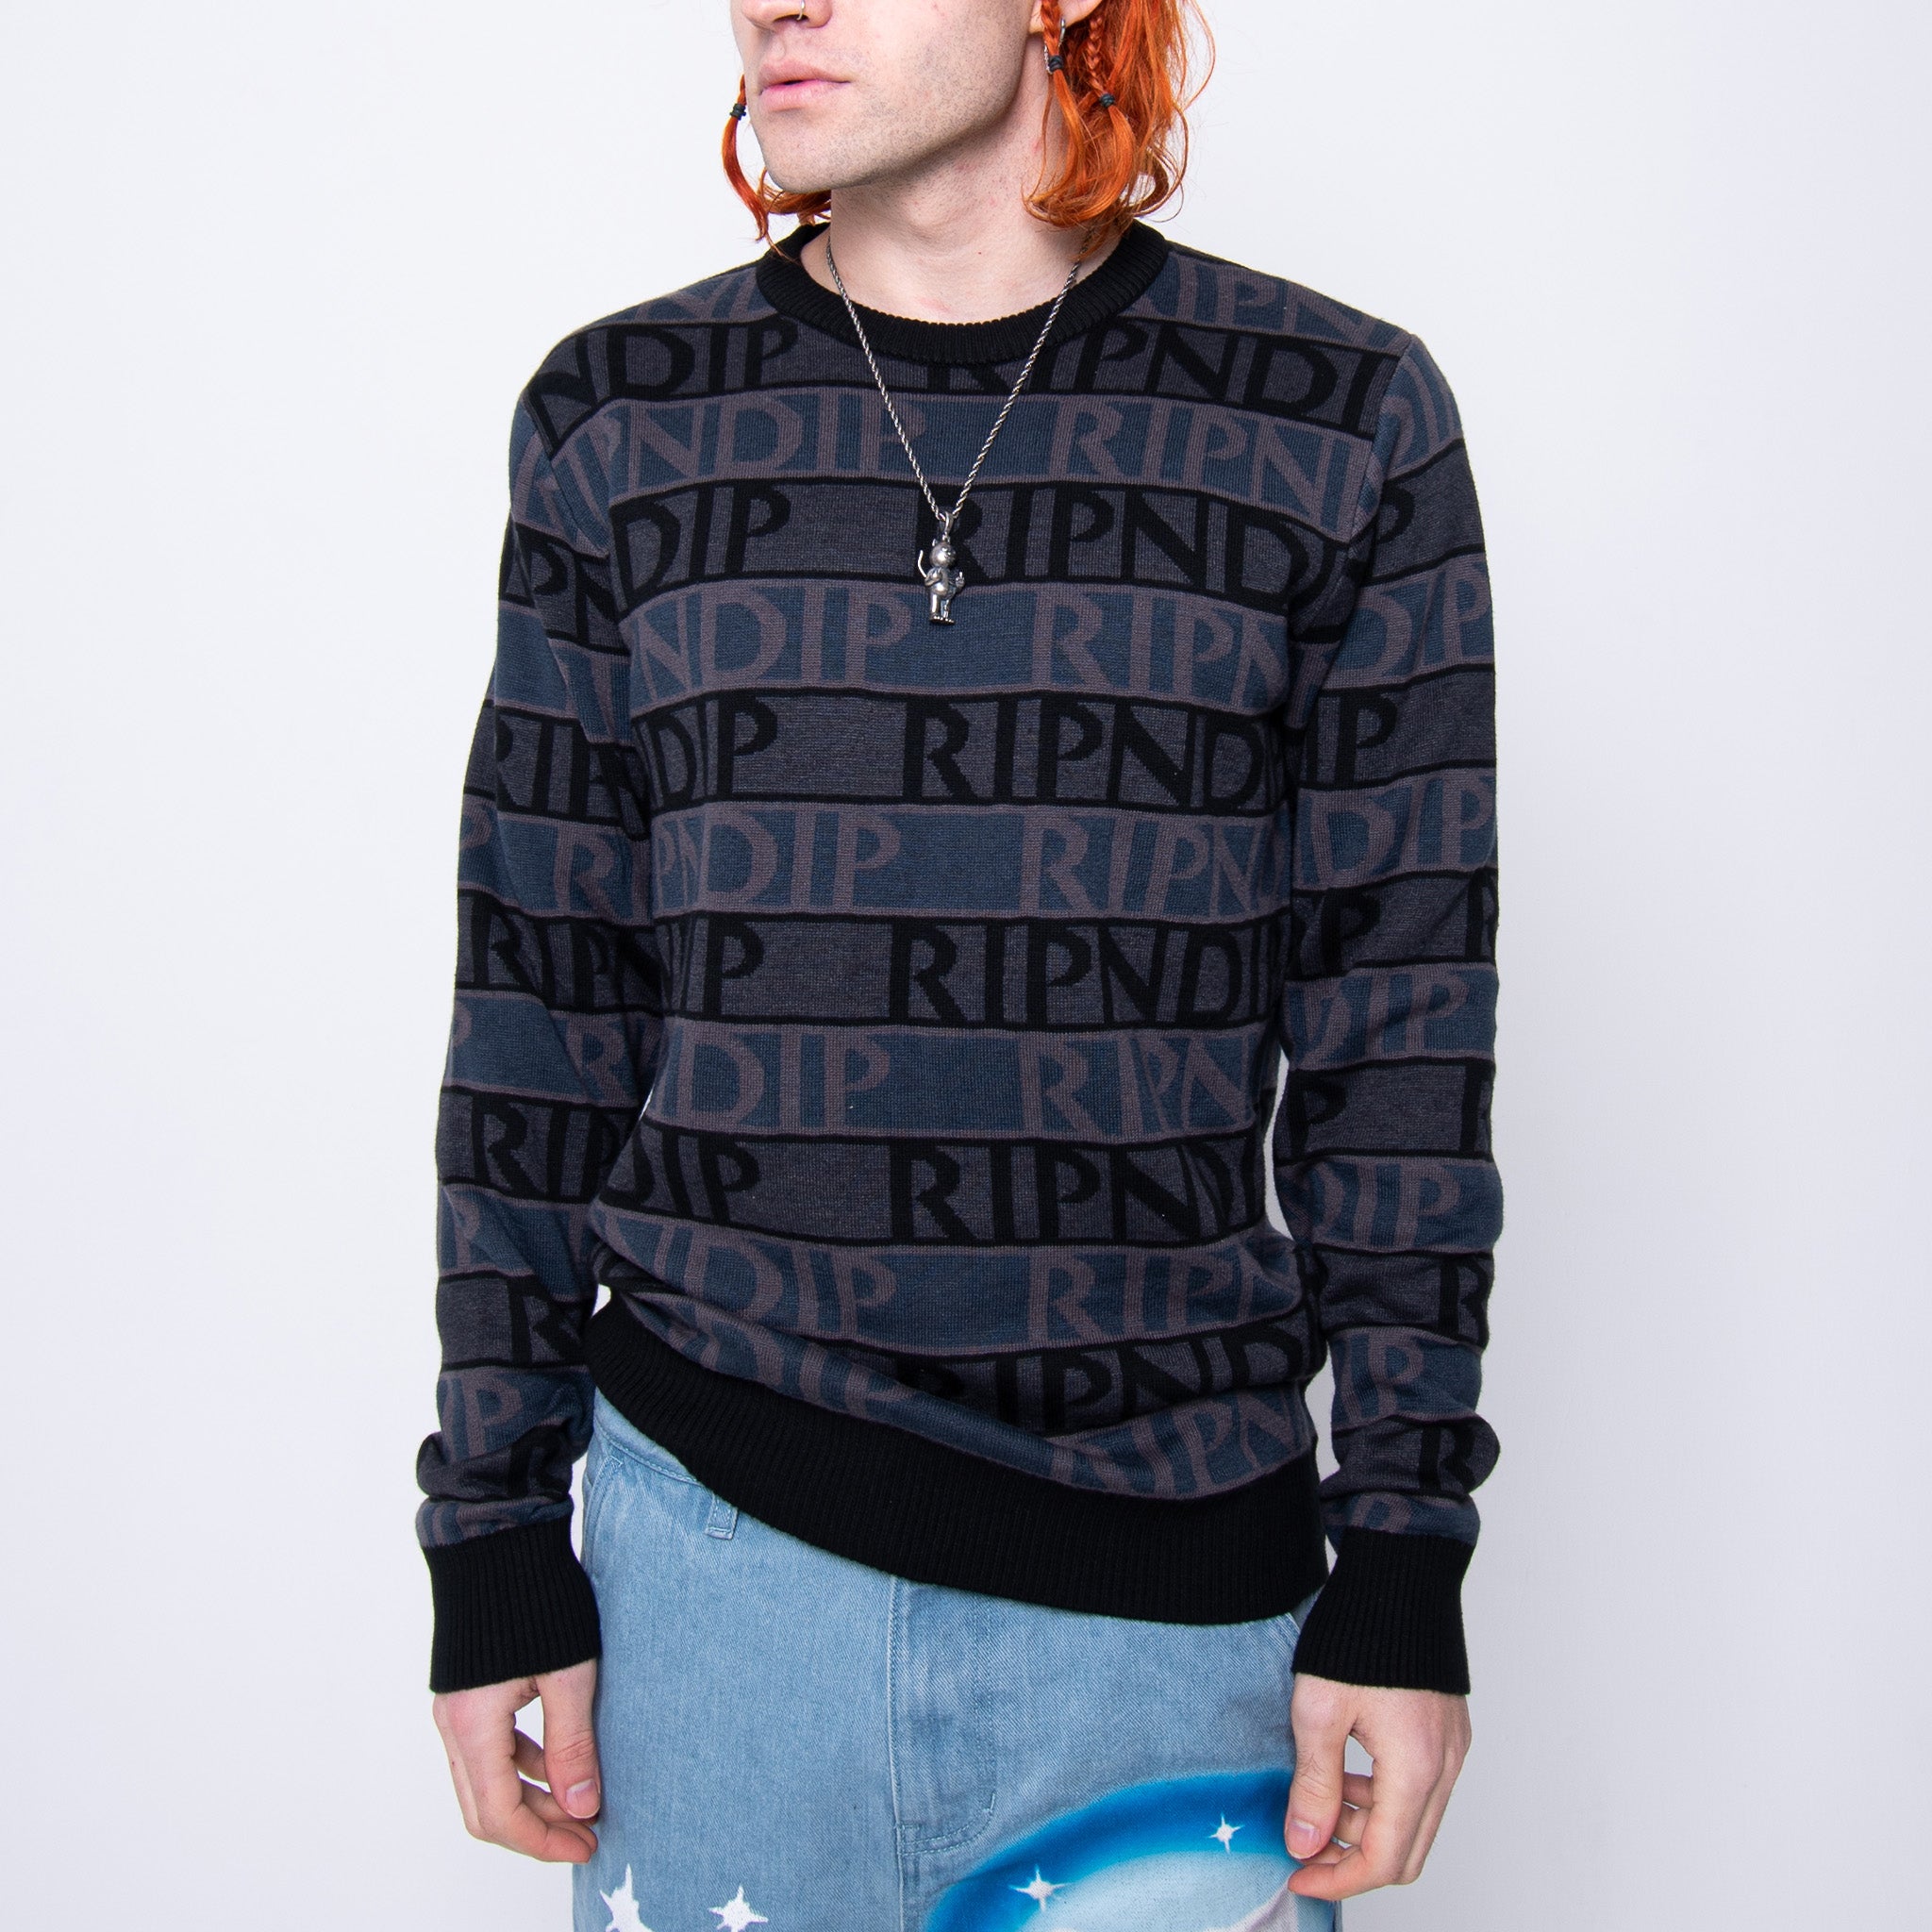 Highland Knit Sweater (Black)